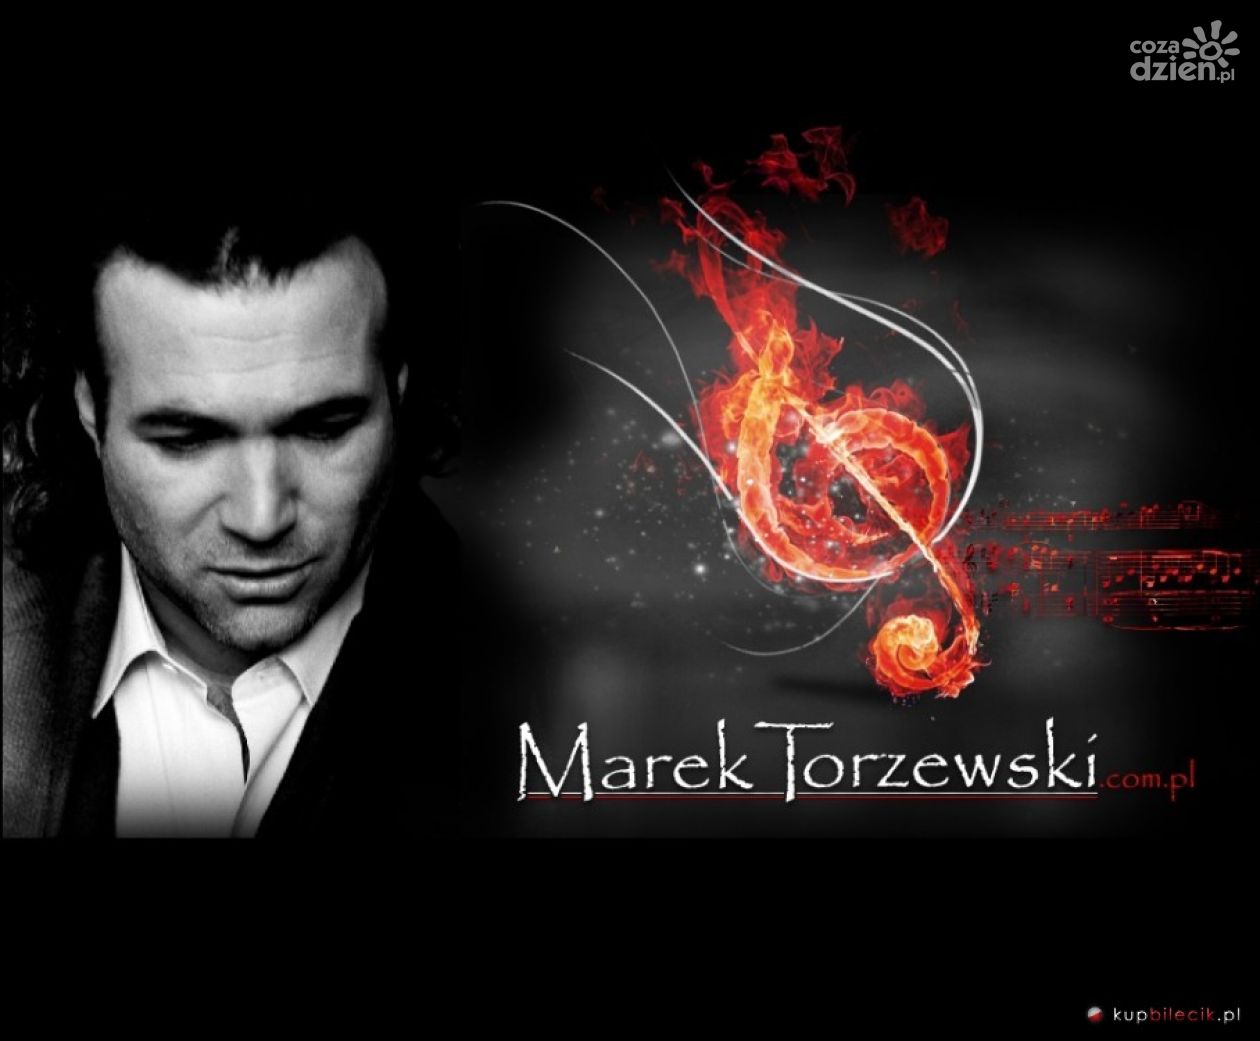 Marek Torzewski Live